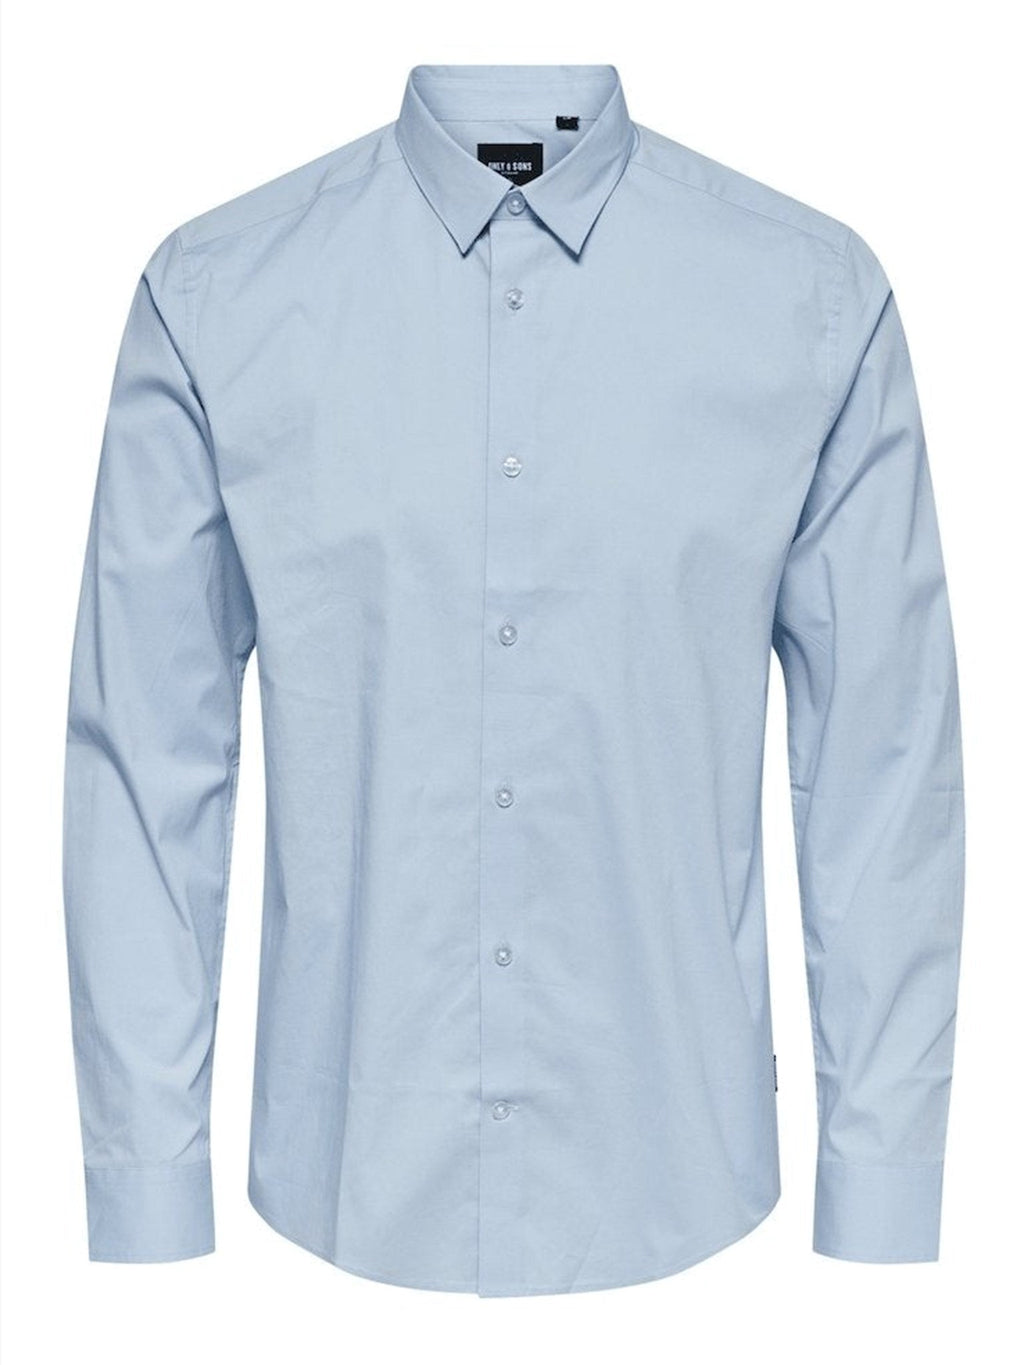 Bart ECO Shirt - Light blue (Organic cotton)